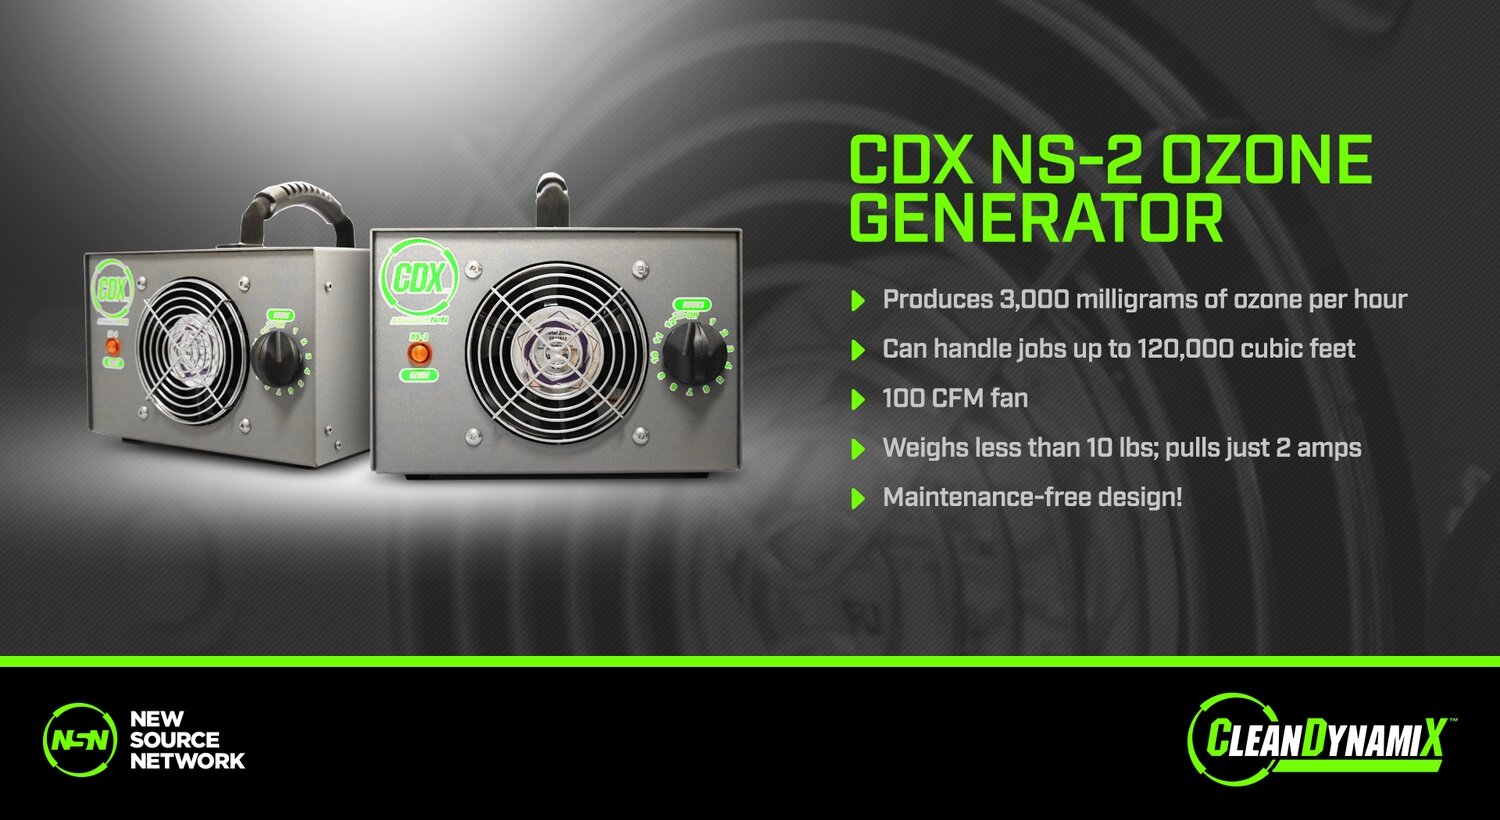 CDX NS-2 Ozone Generator